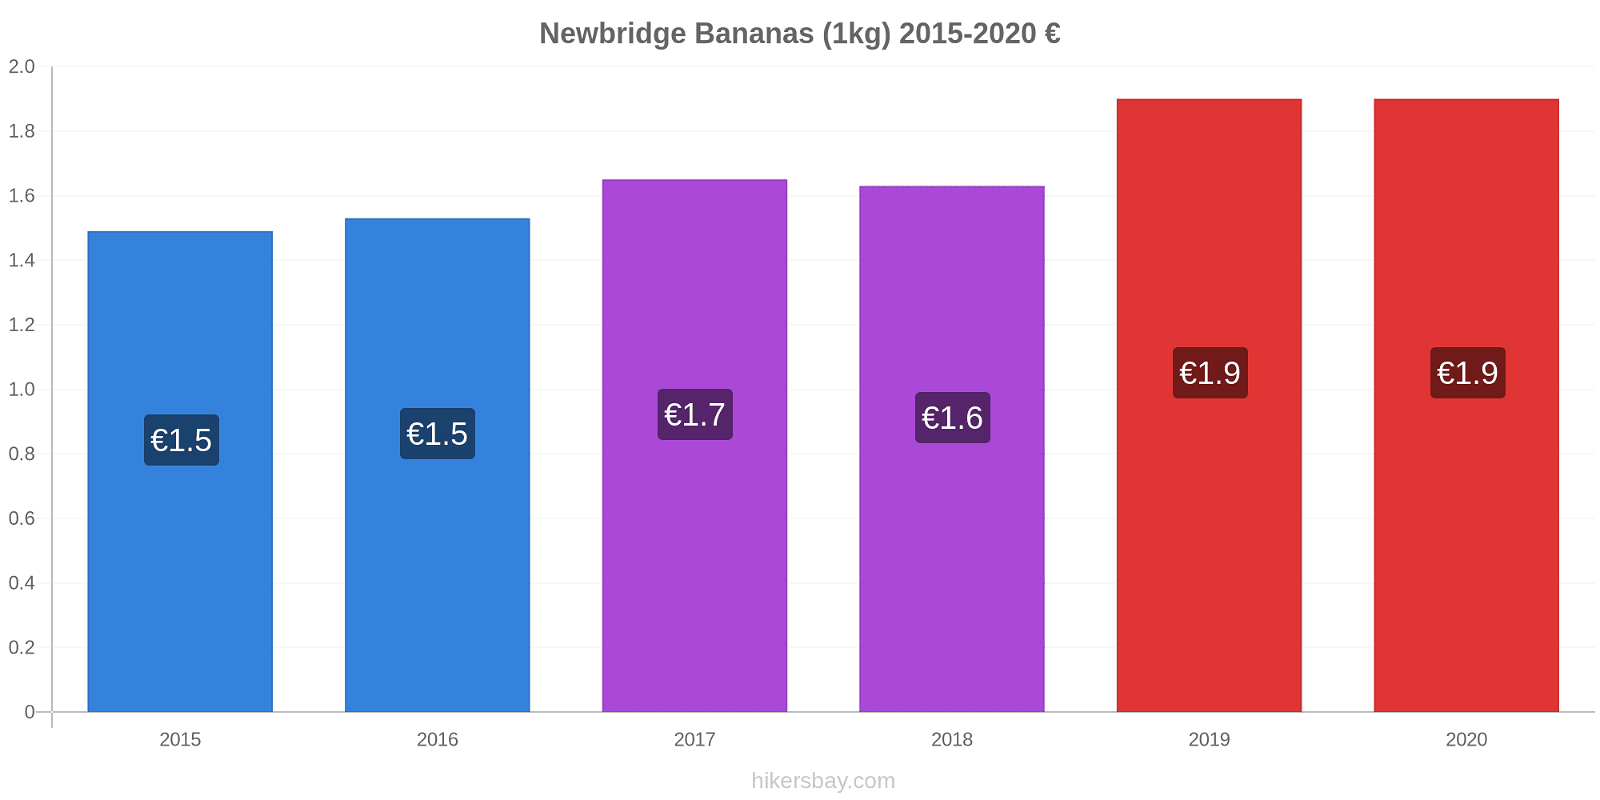 Newbridge price changes Bananas (1kg) hikersbay.com